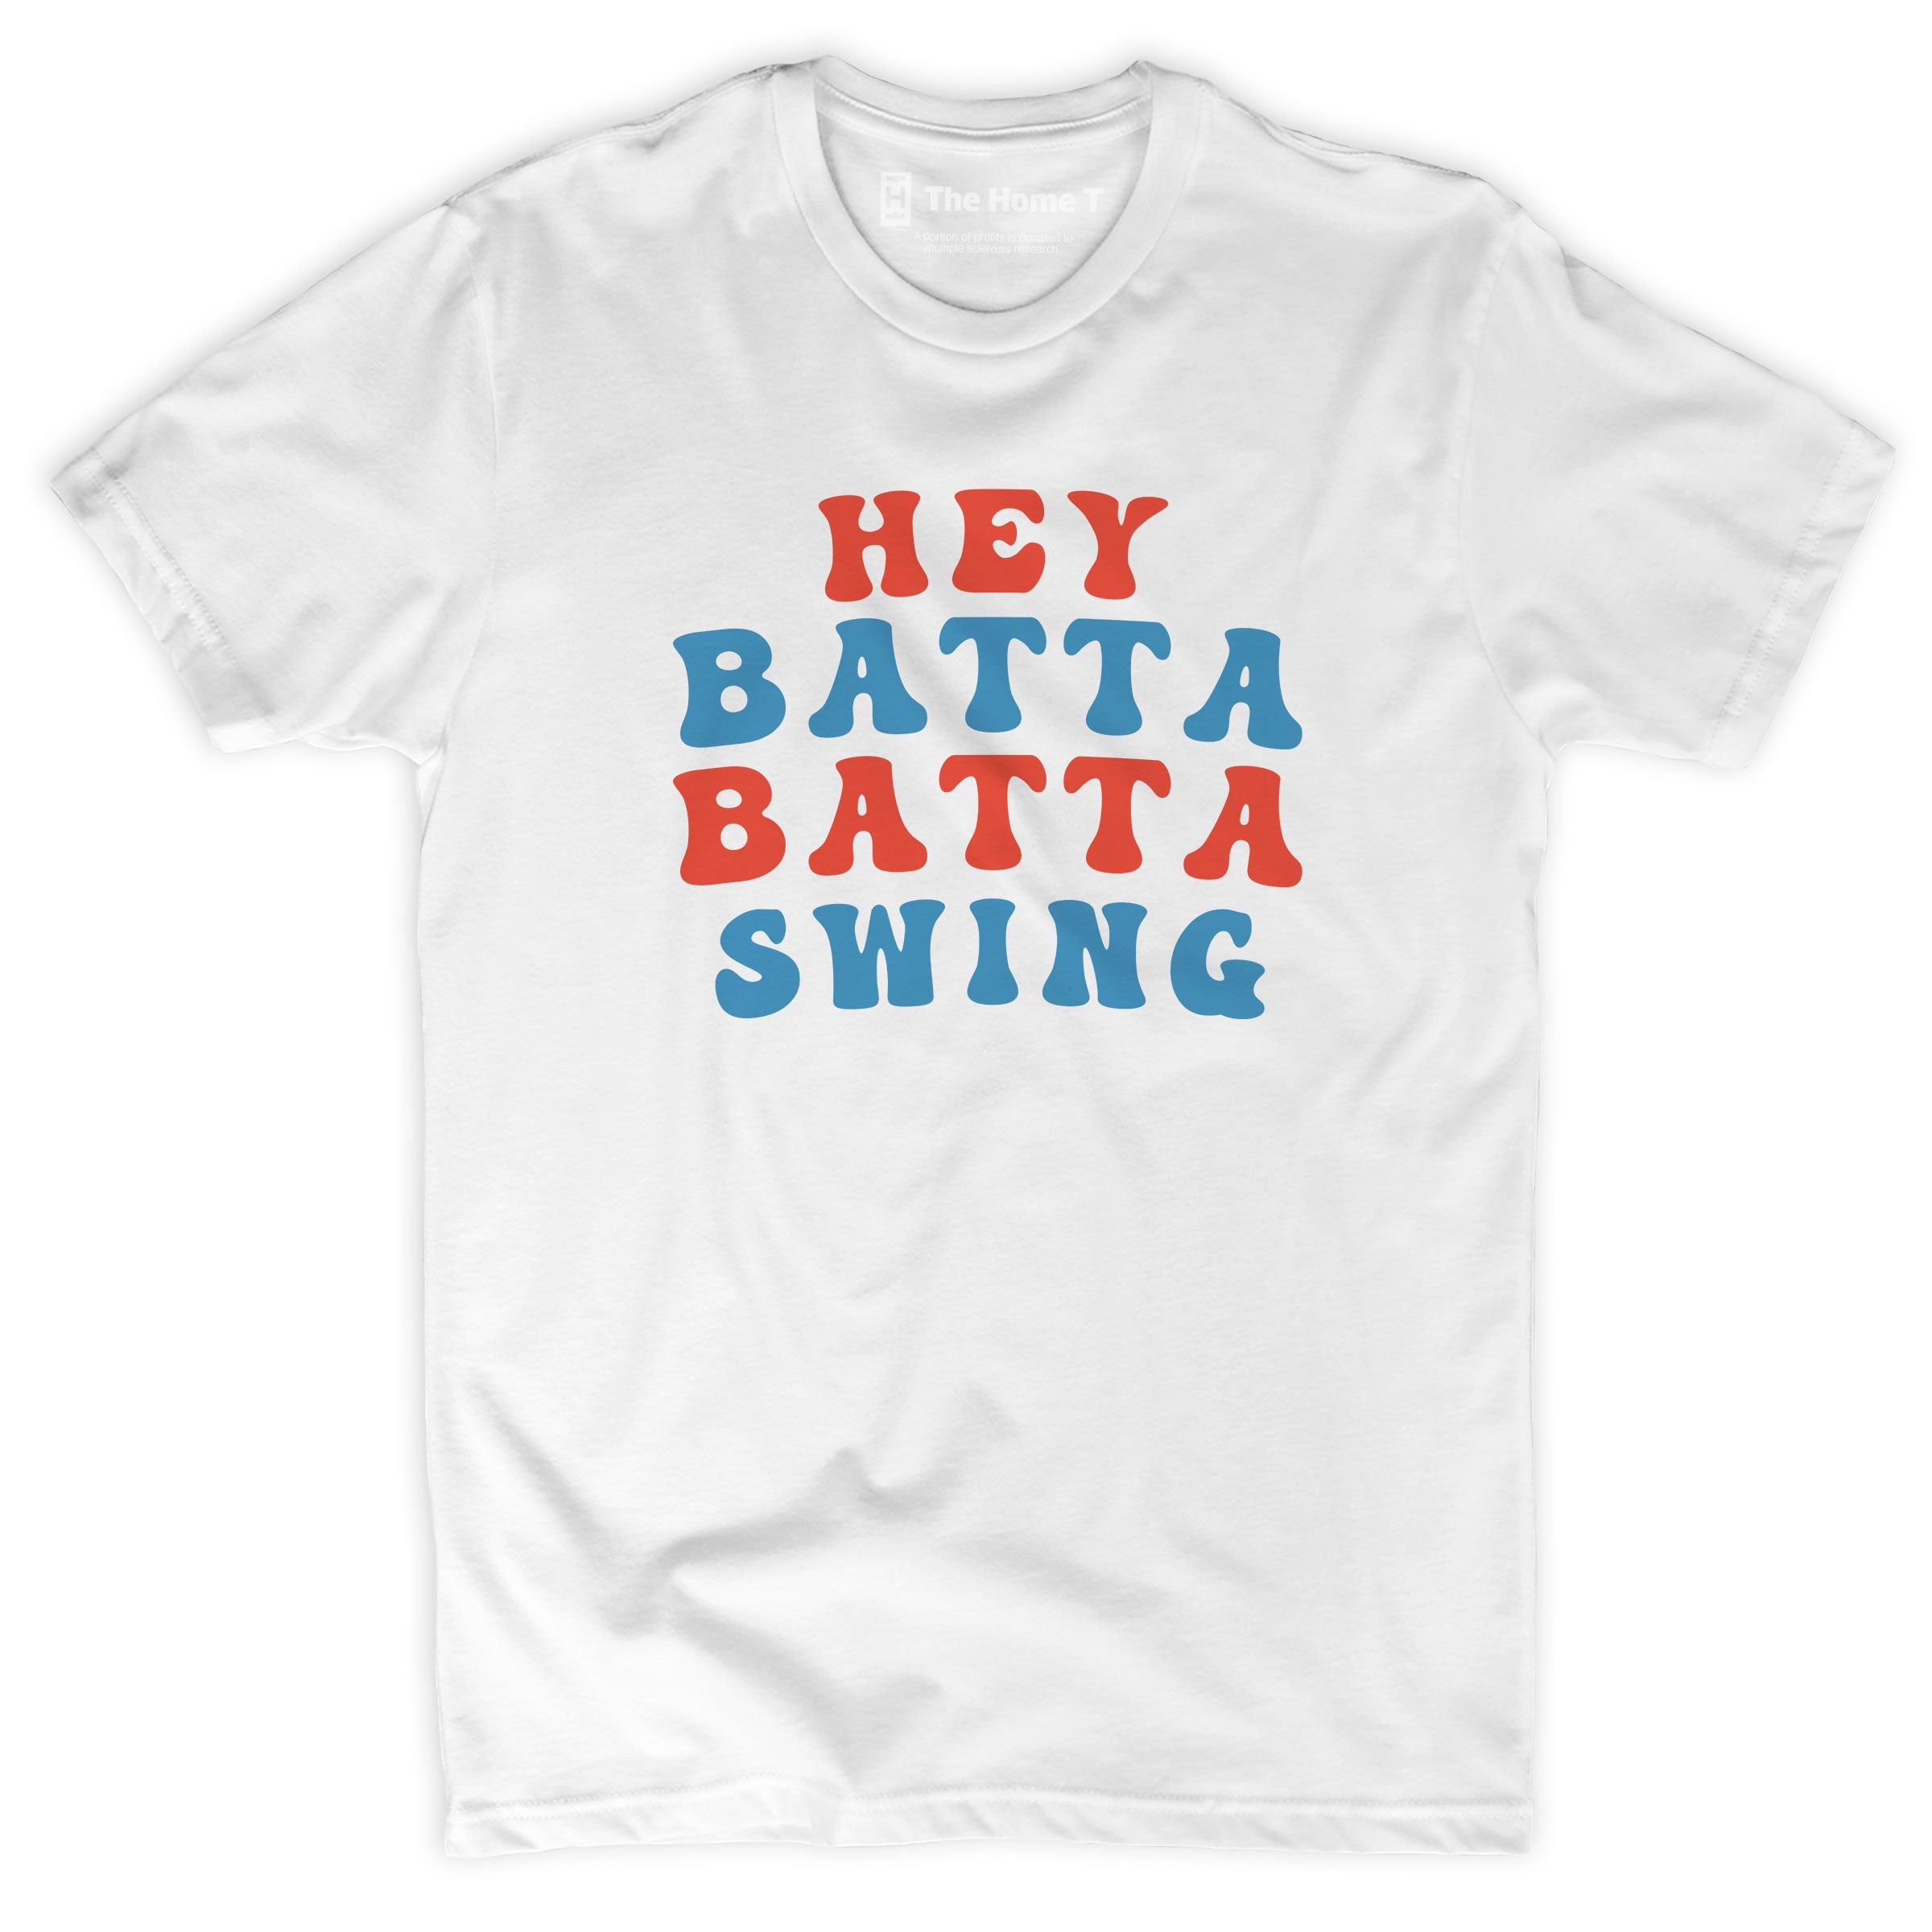 Hey Batta Batta Swing